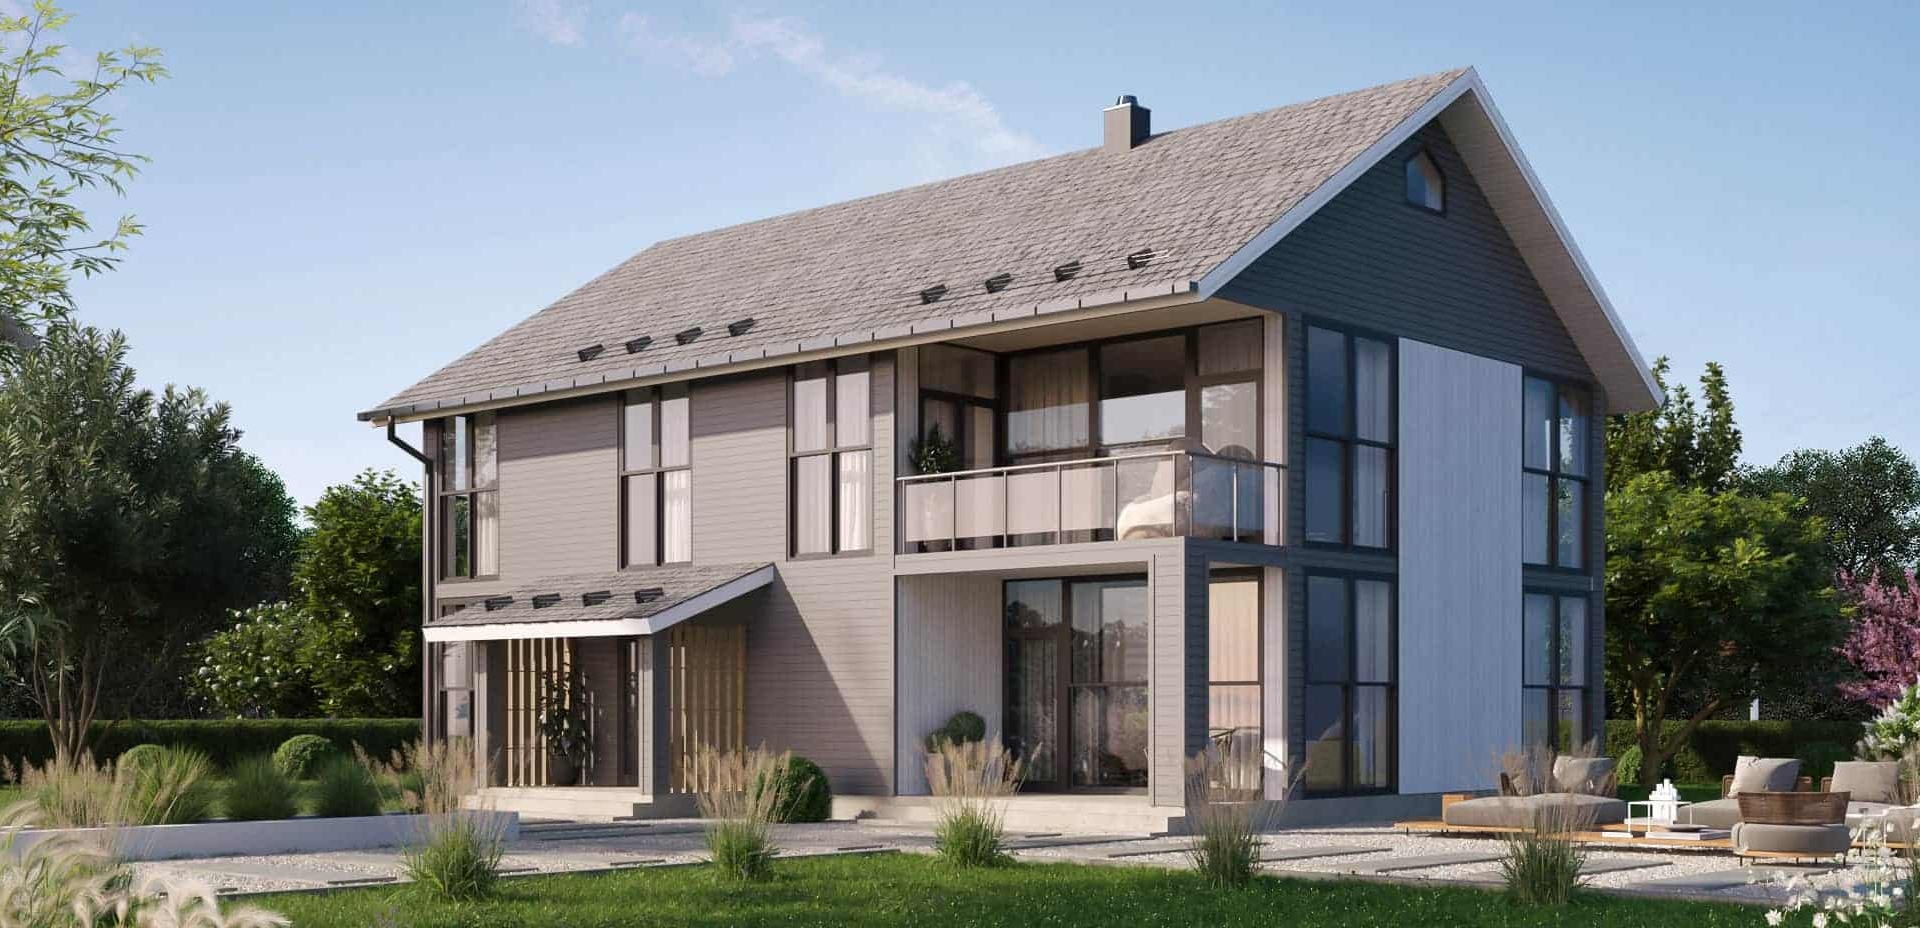 3D rendering house exterior: corner view